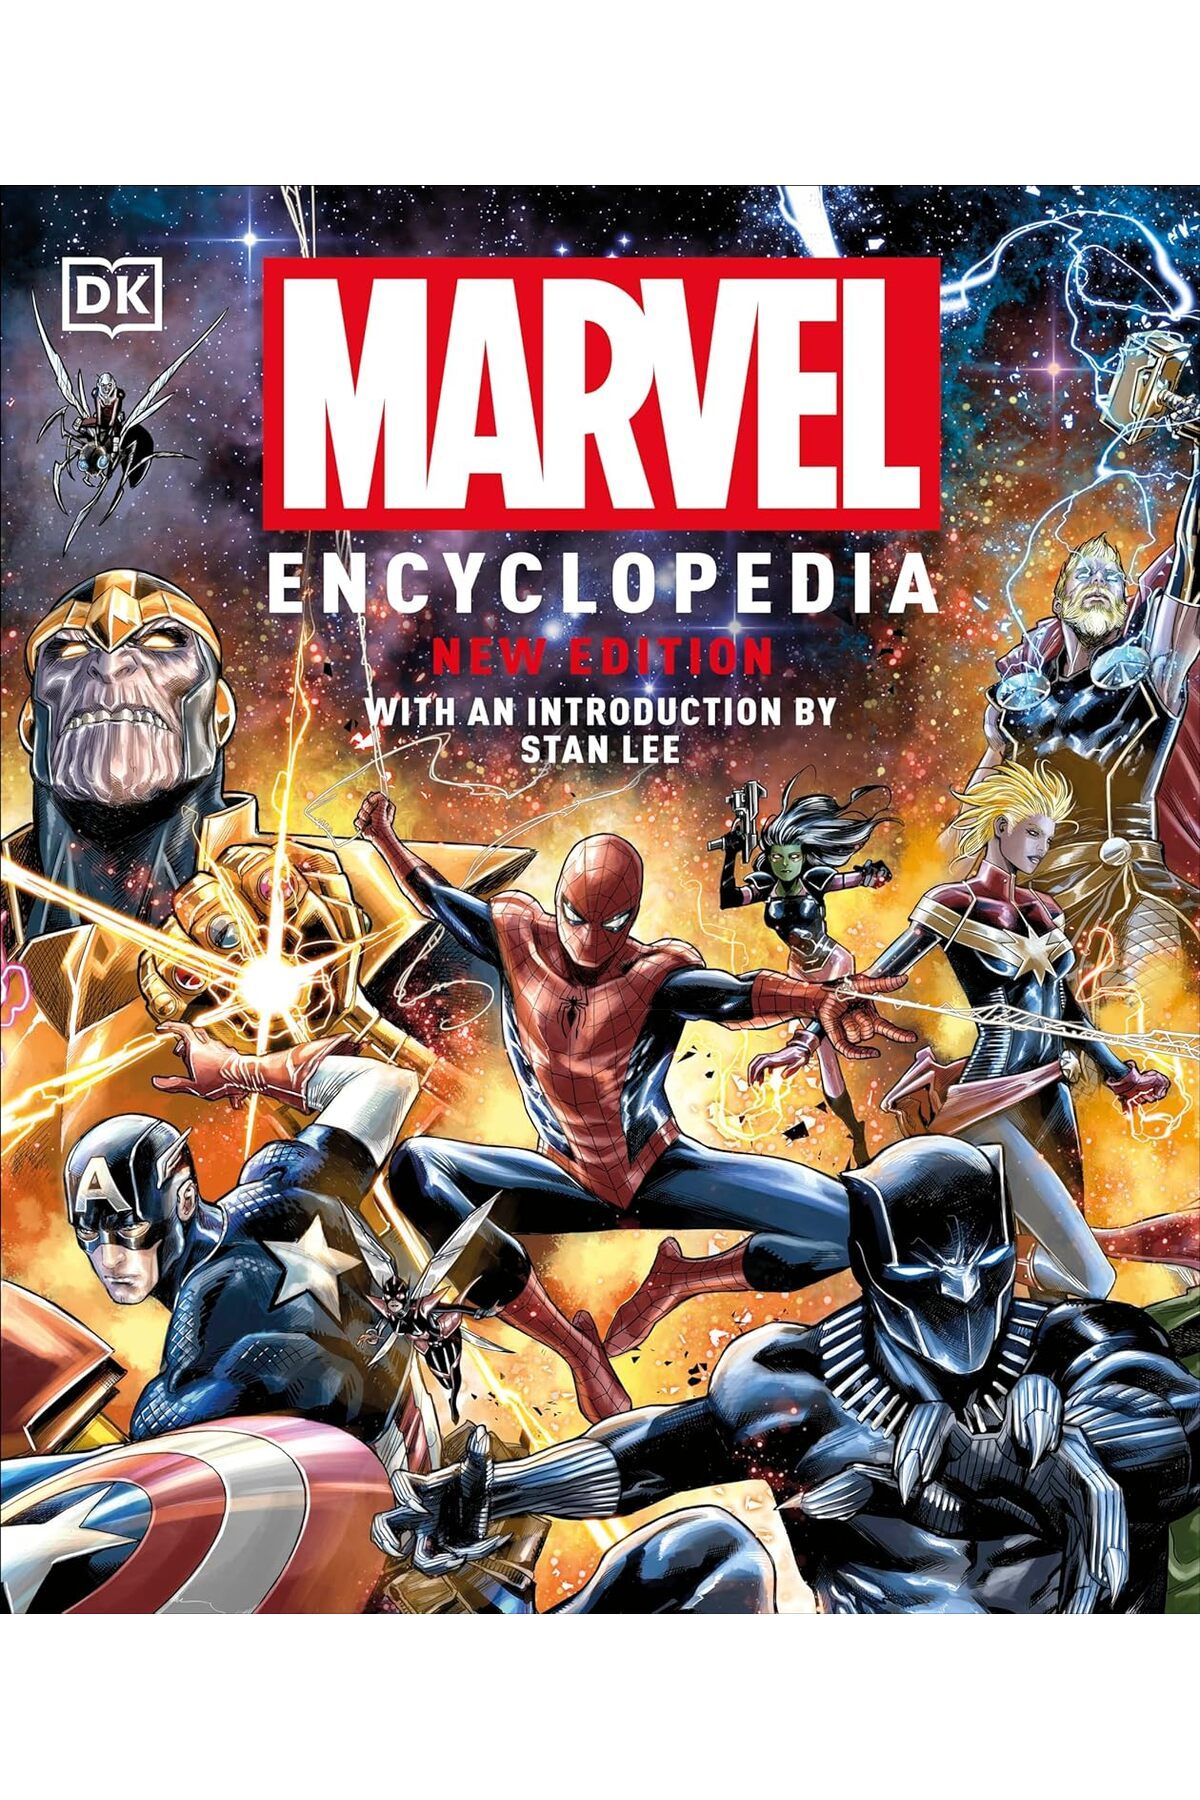 MARVEL Encyclopedia New Edition / Stephen Wiacek